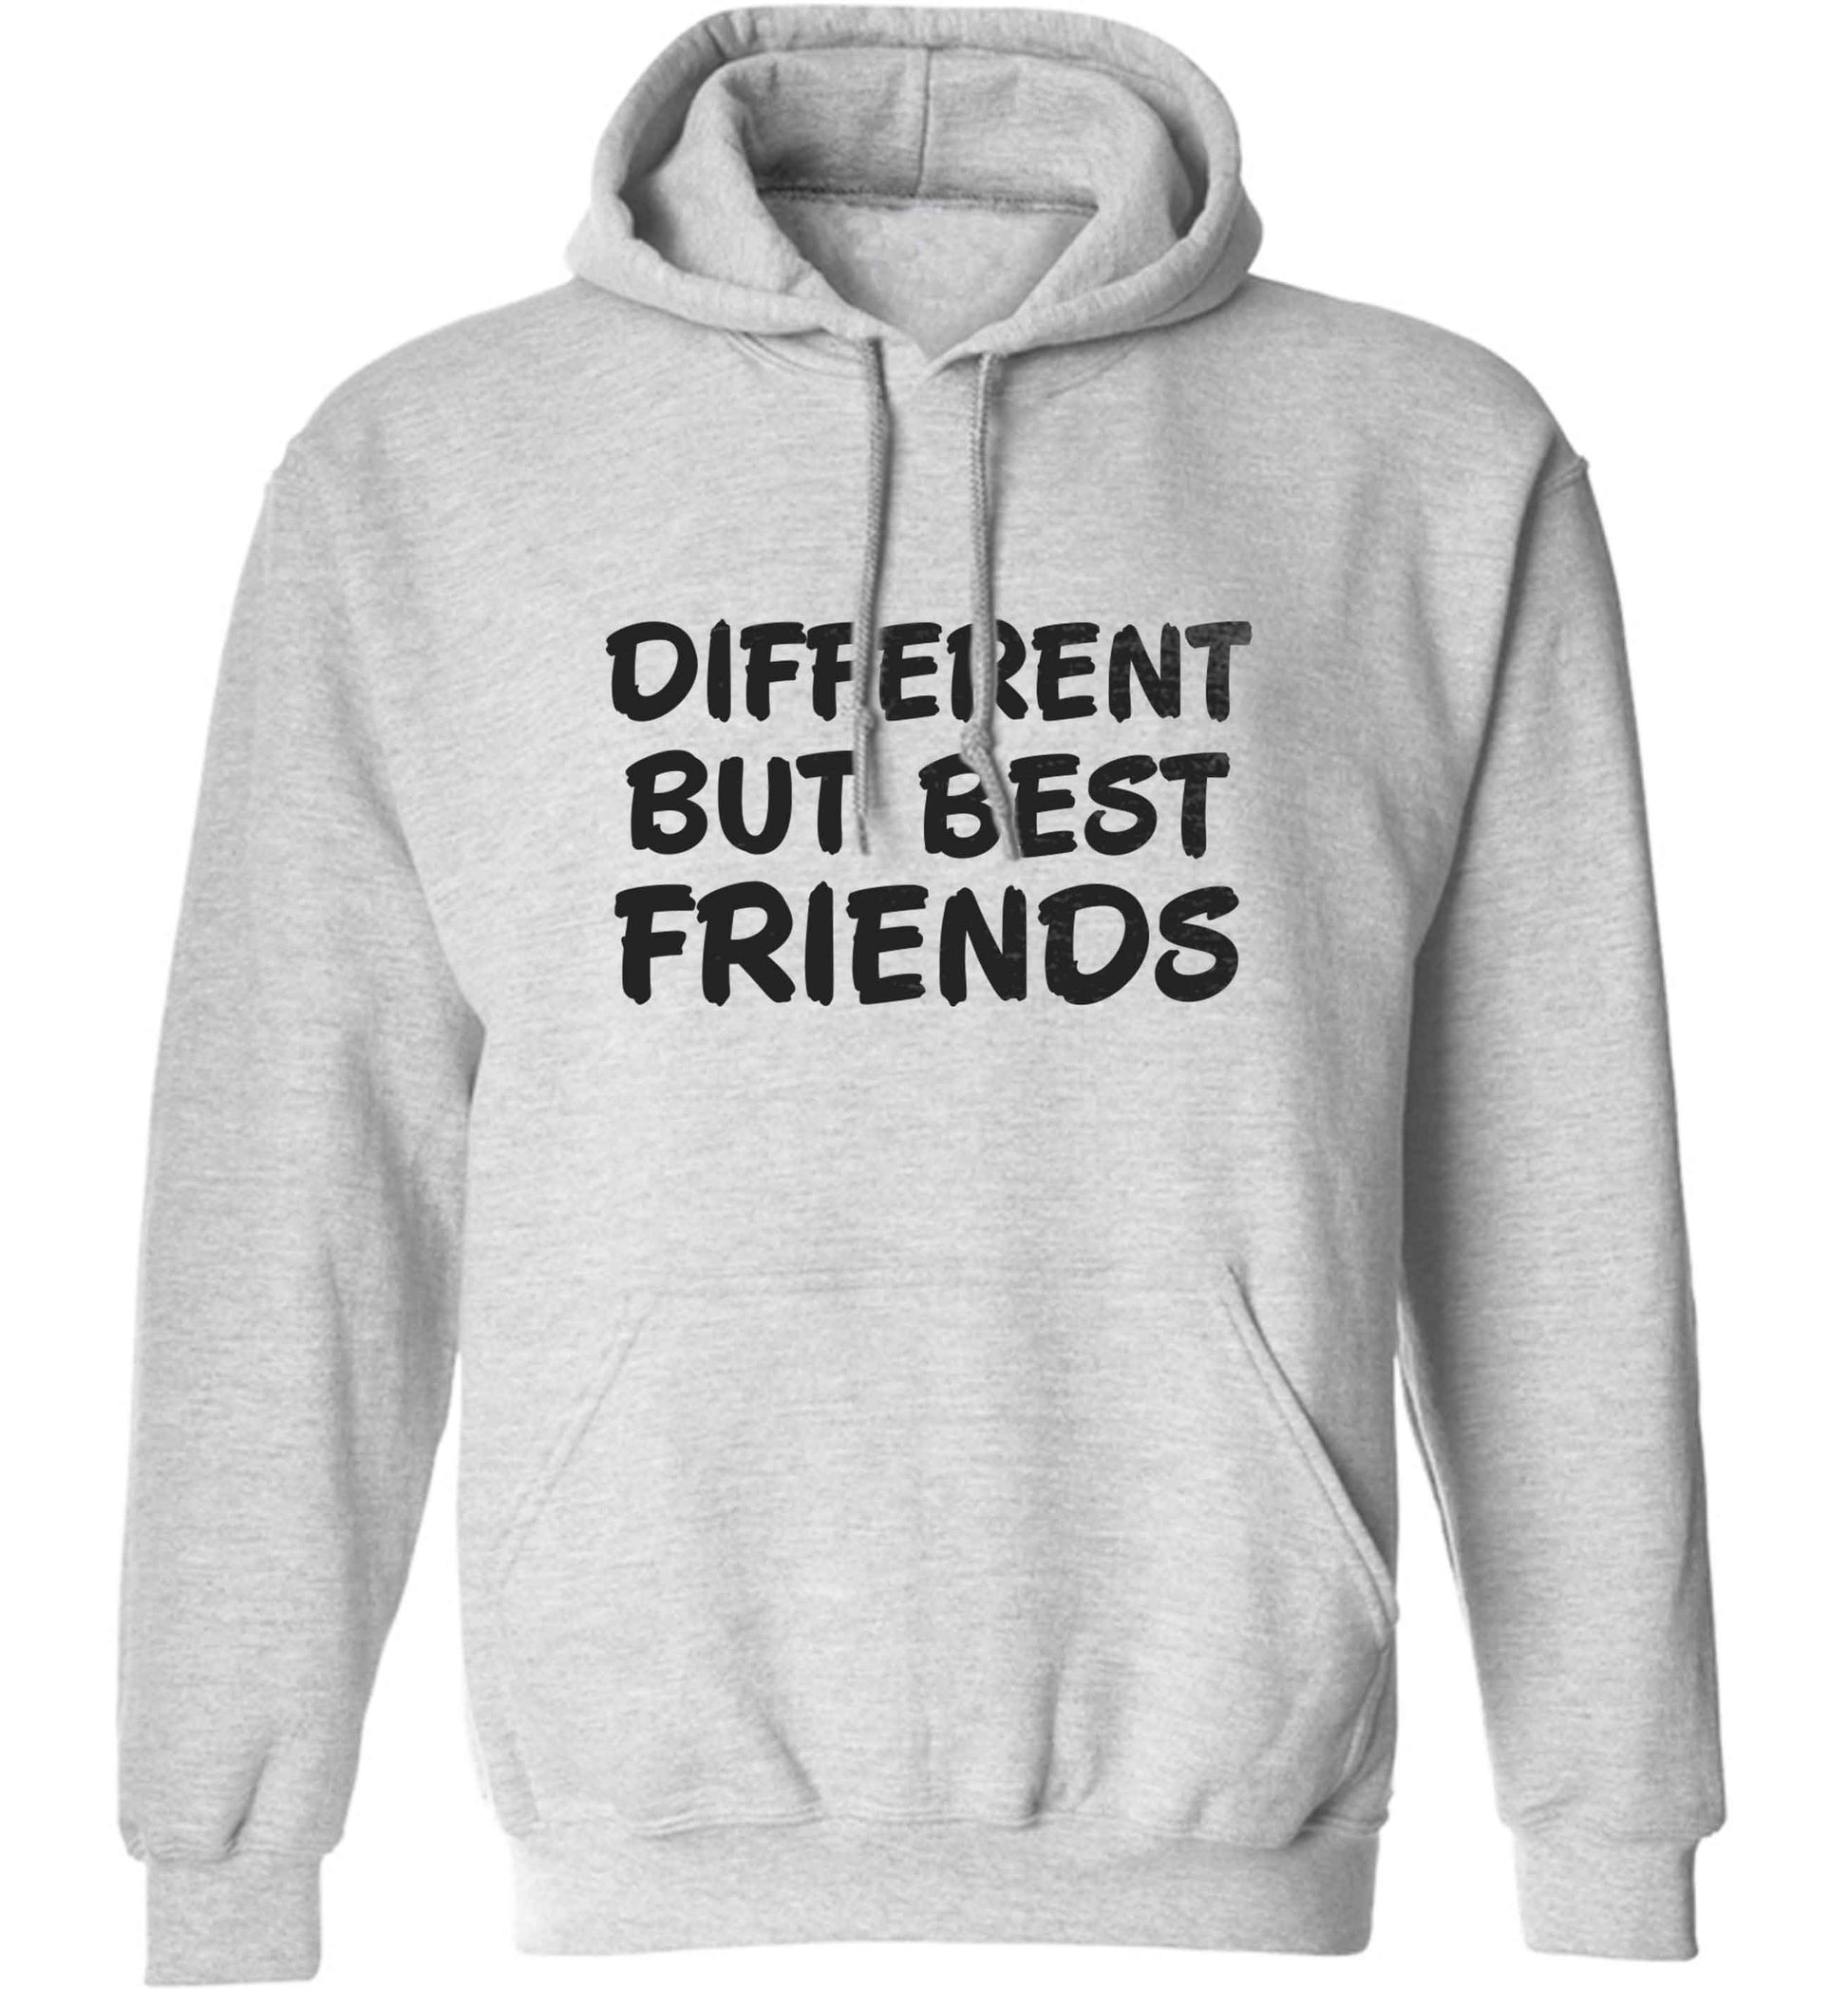 Different but best friends adults unisex grey hoodie 2XL